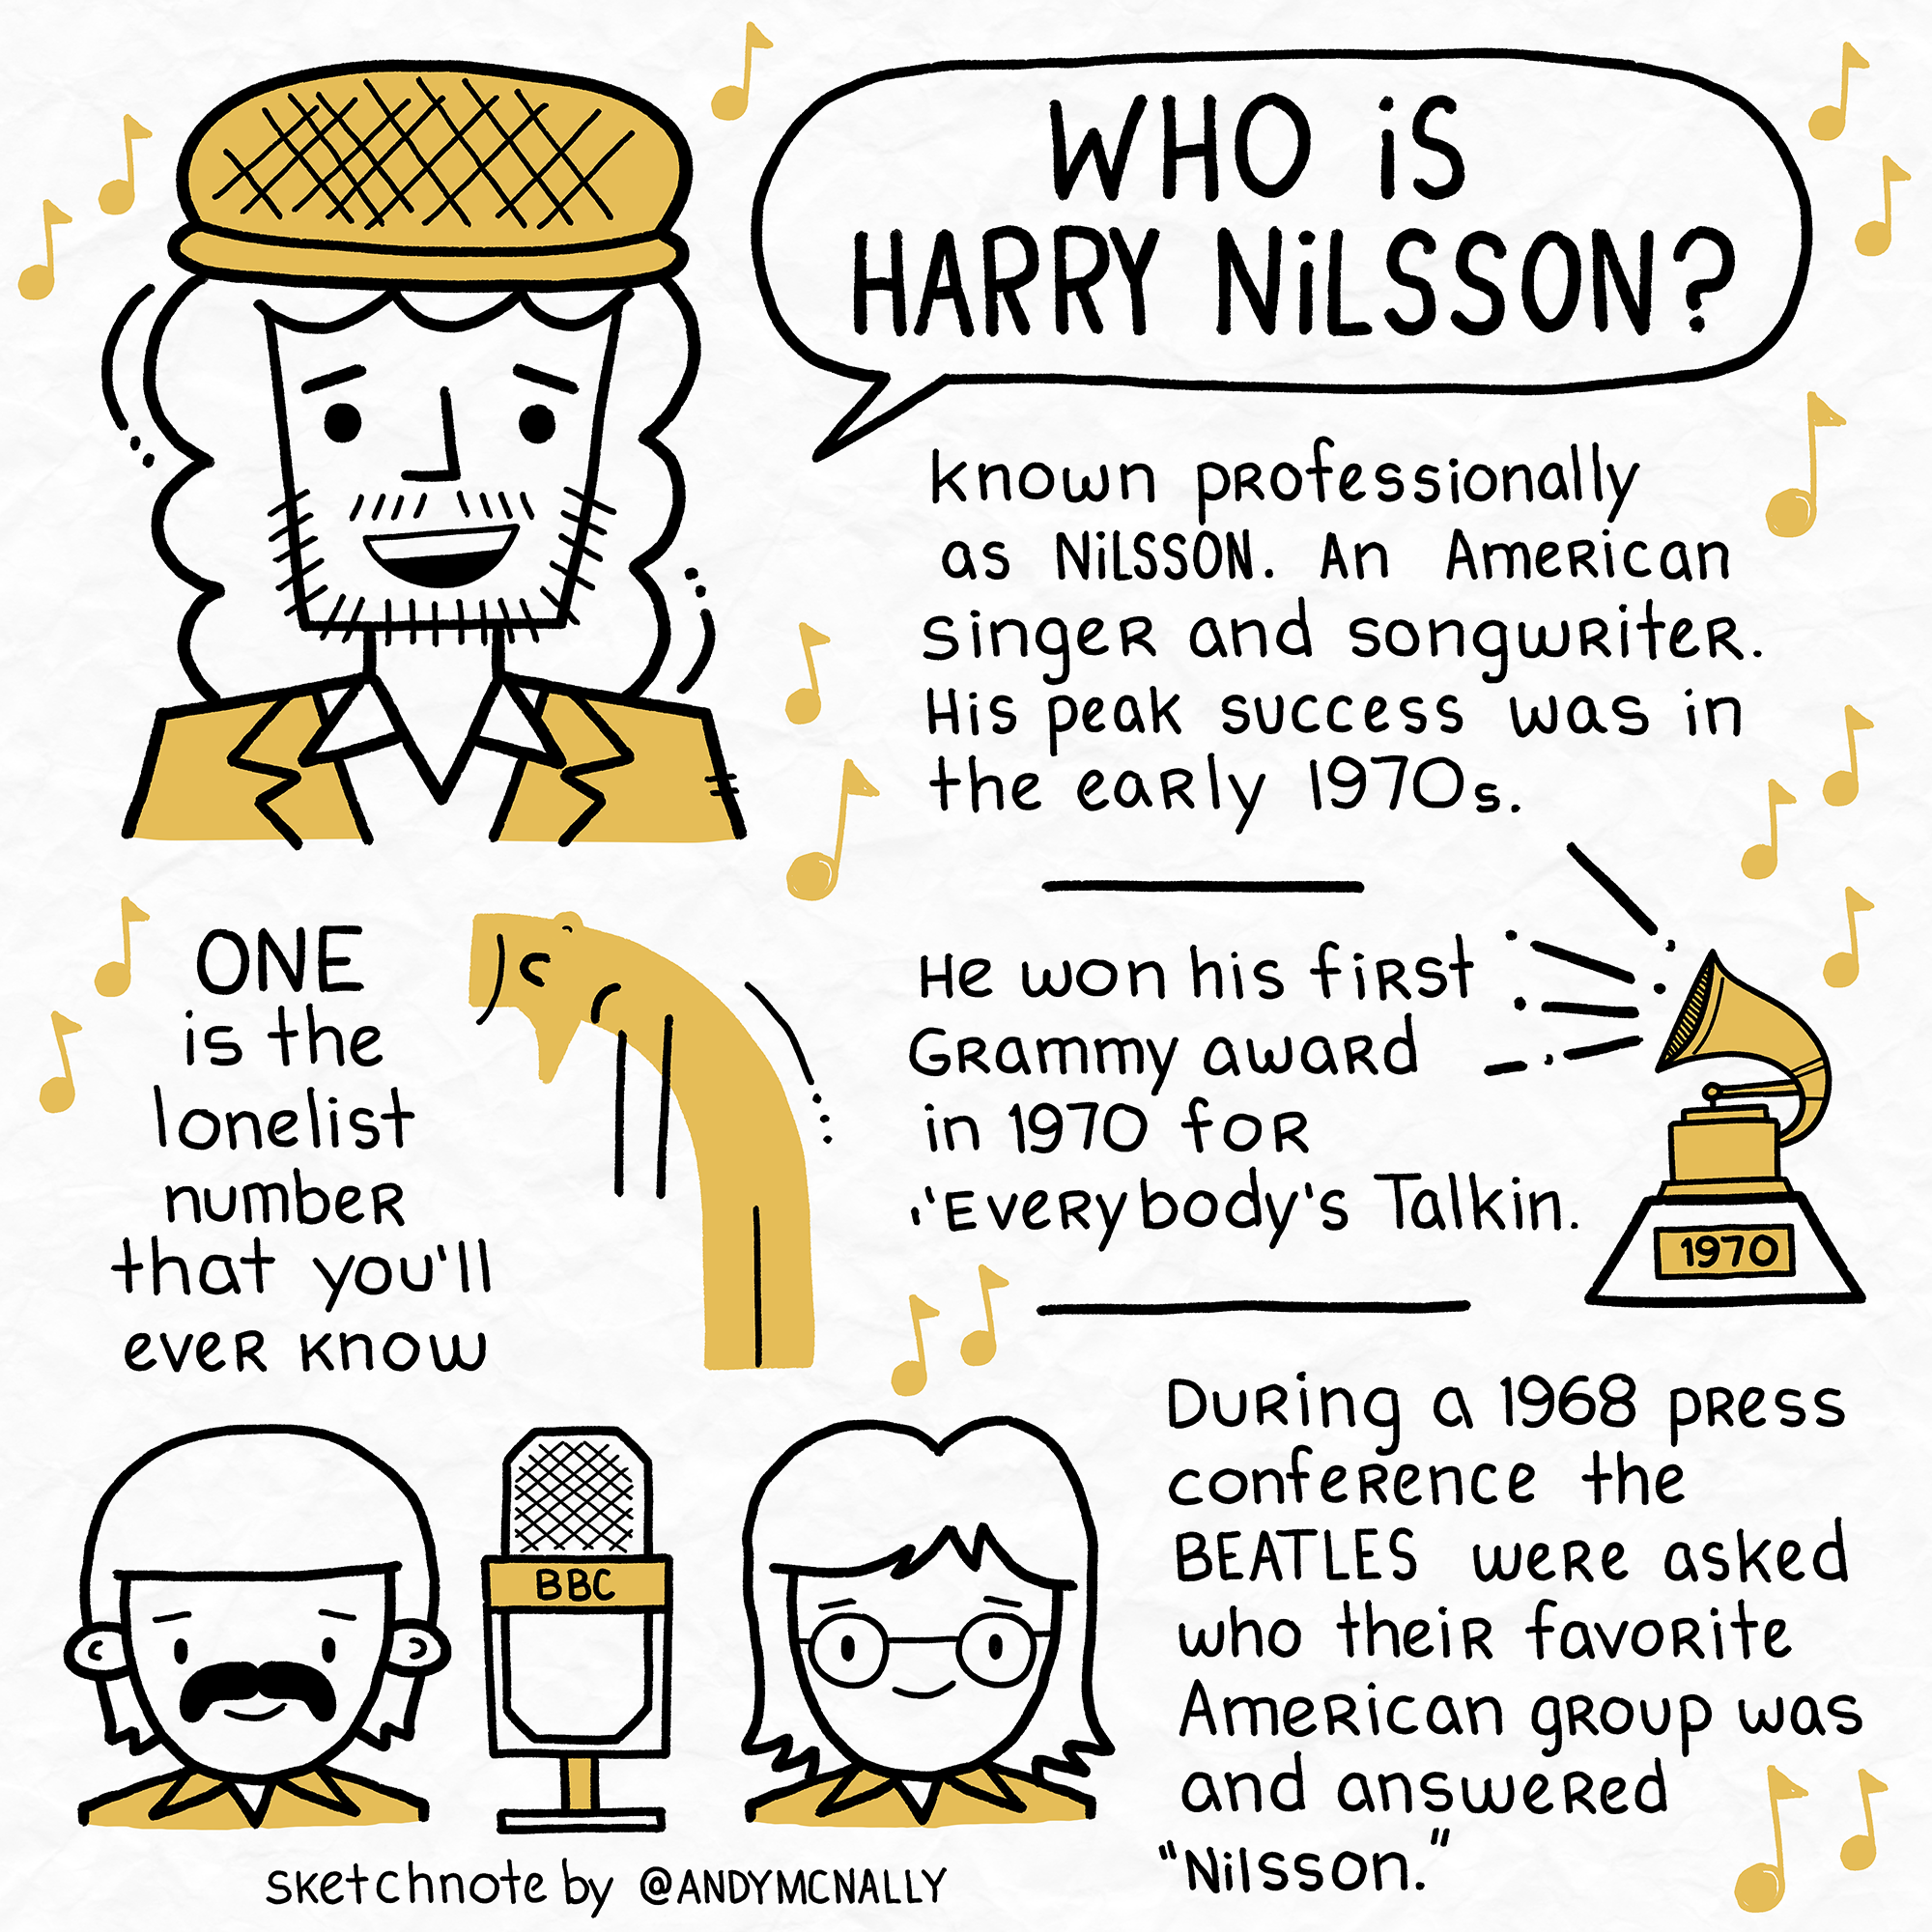 Harry Nilsson sketchnotes